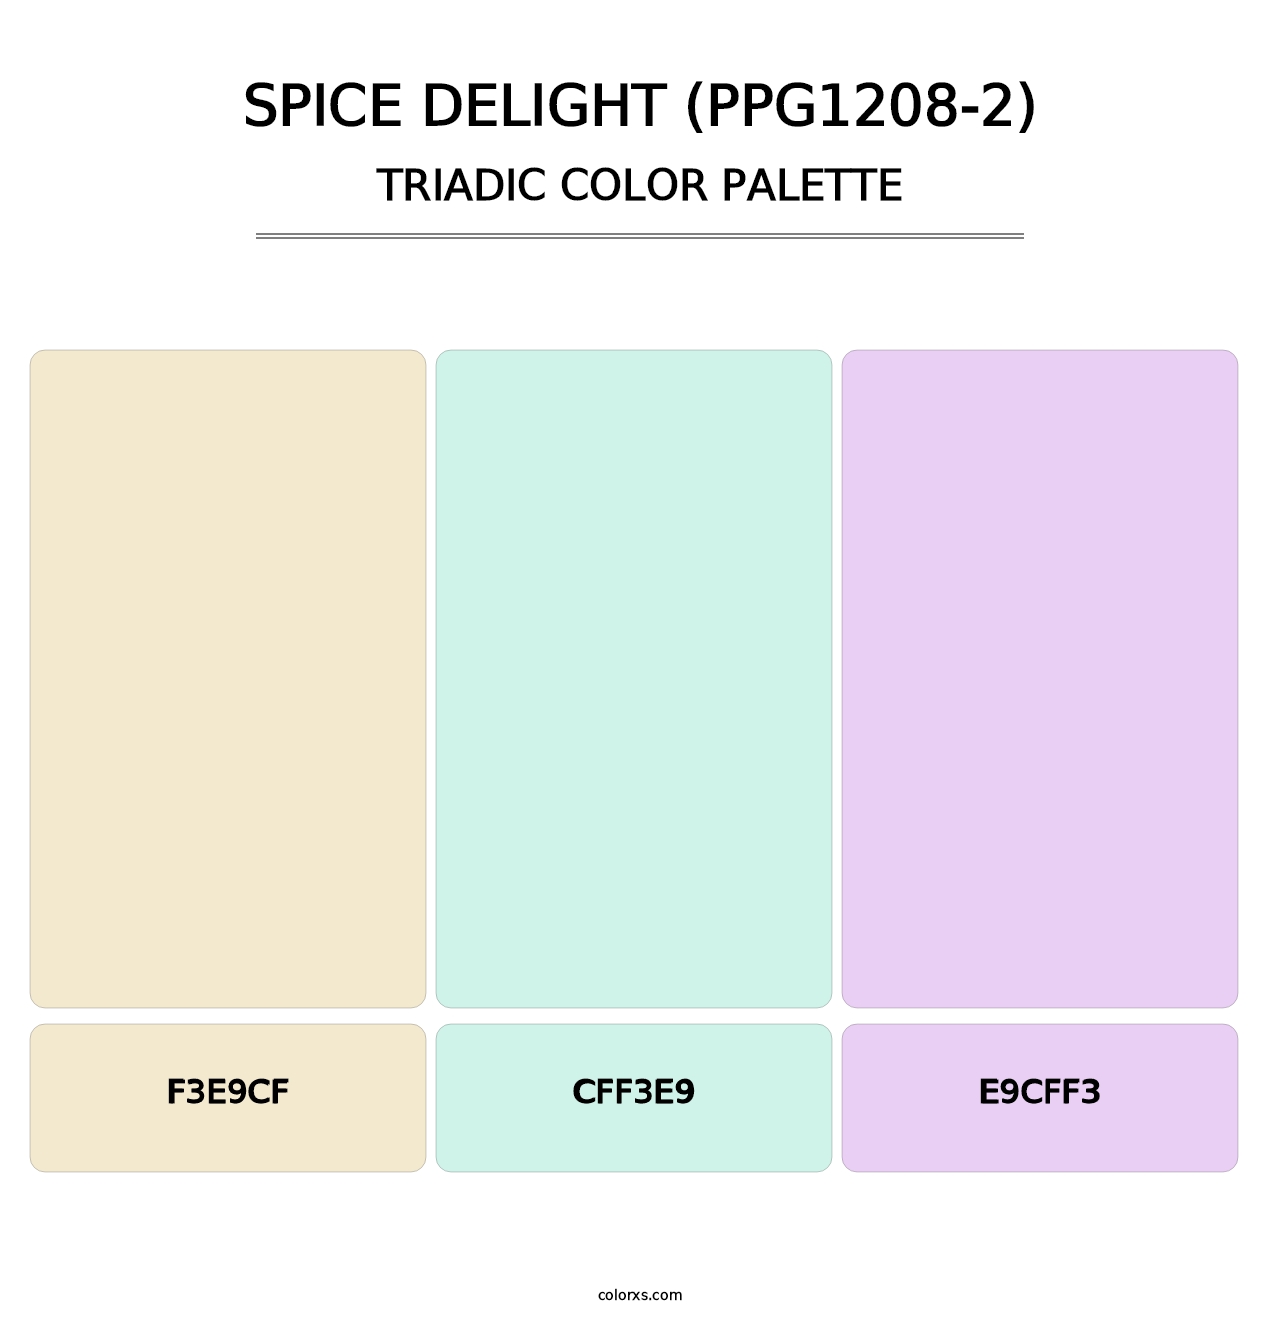 Spice Delight (PPG1208-2) - Triadic Color Palette